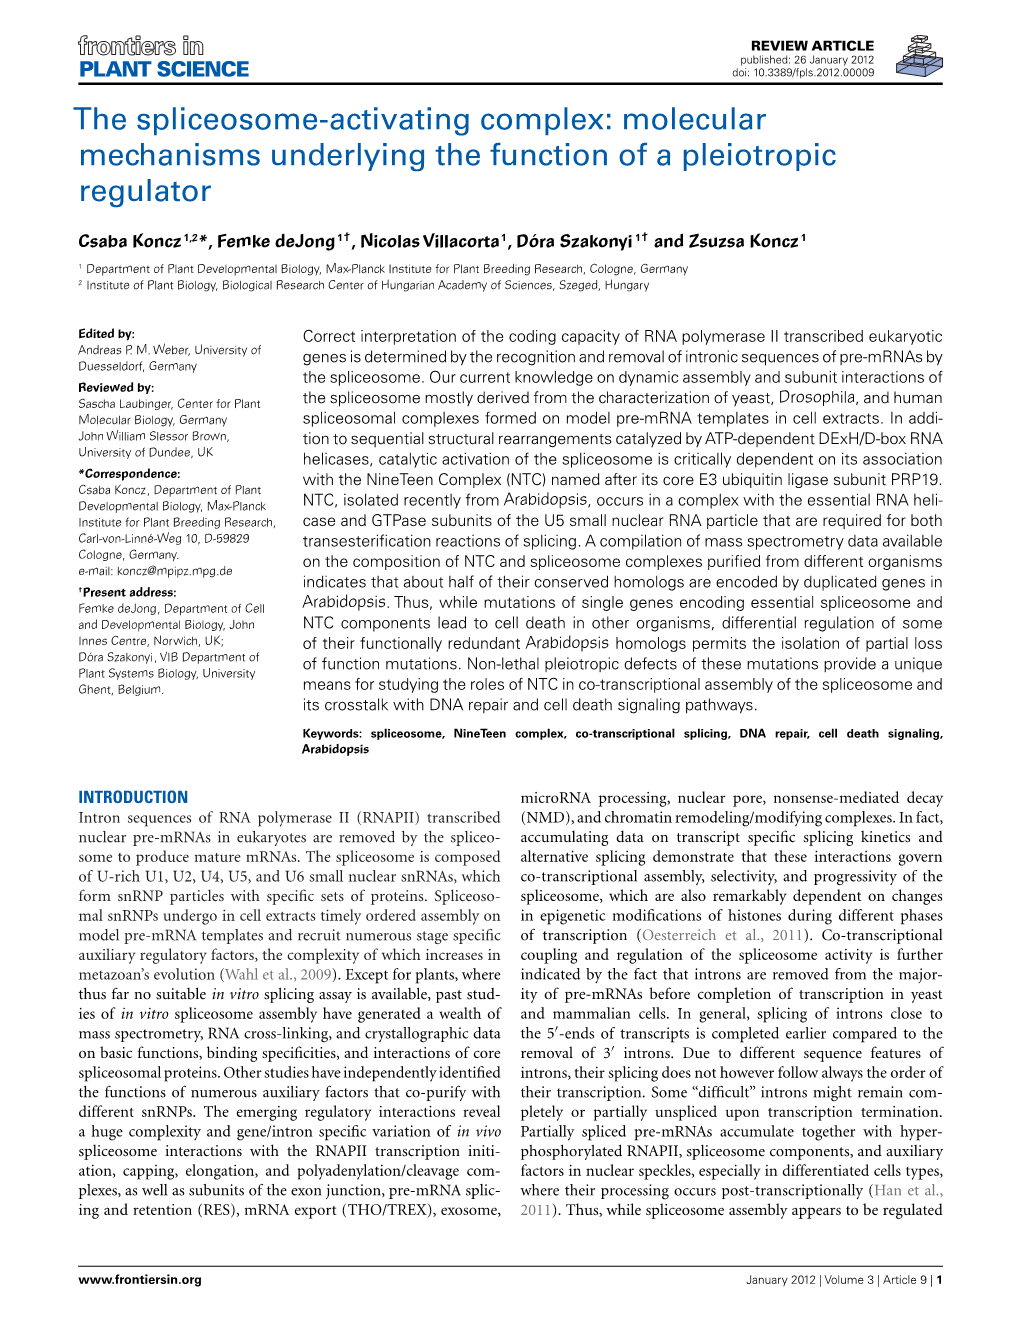 The Spliceosome-Activating Complex: Molecular Mechanisms Underlying the Function of a Pleiotropic Regulator